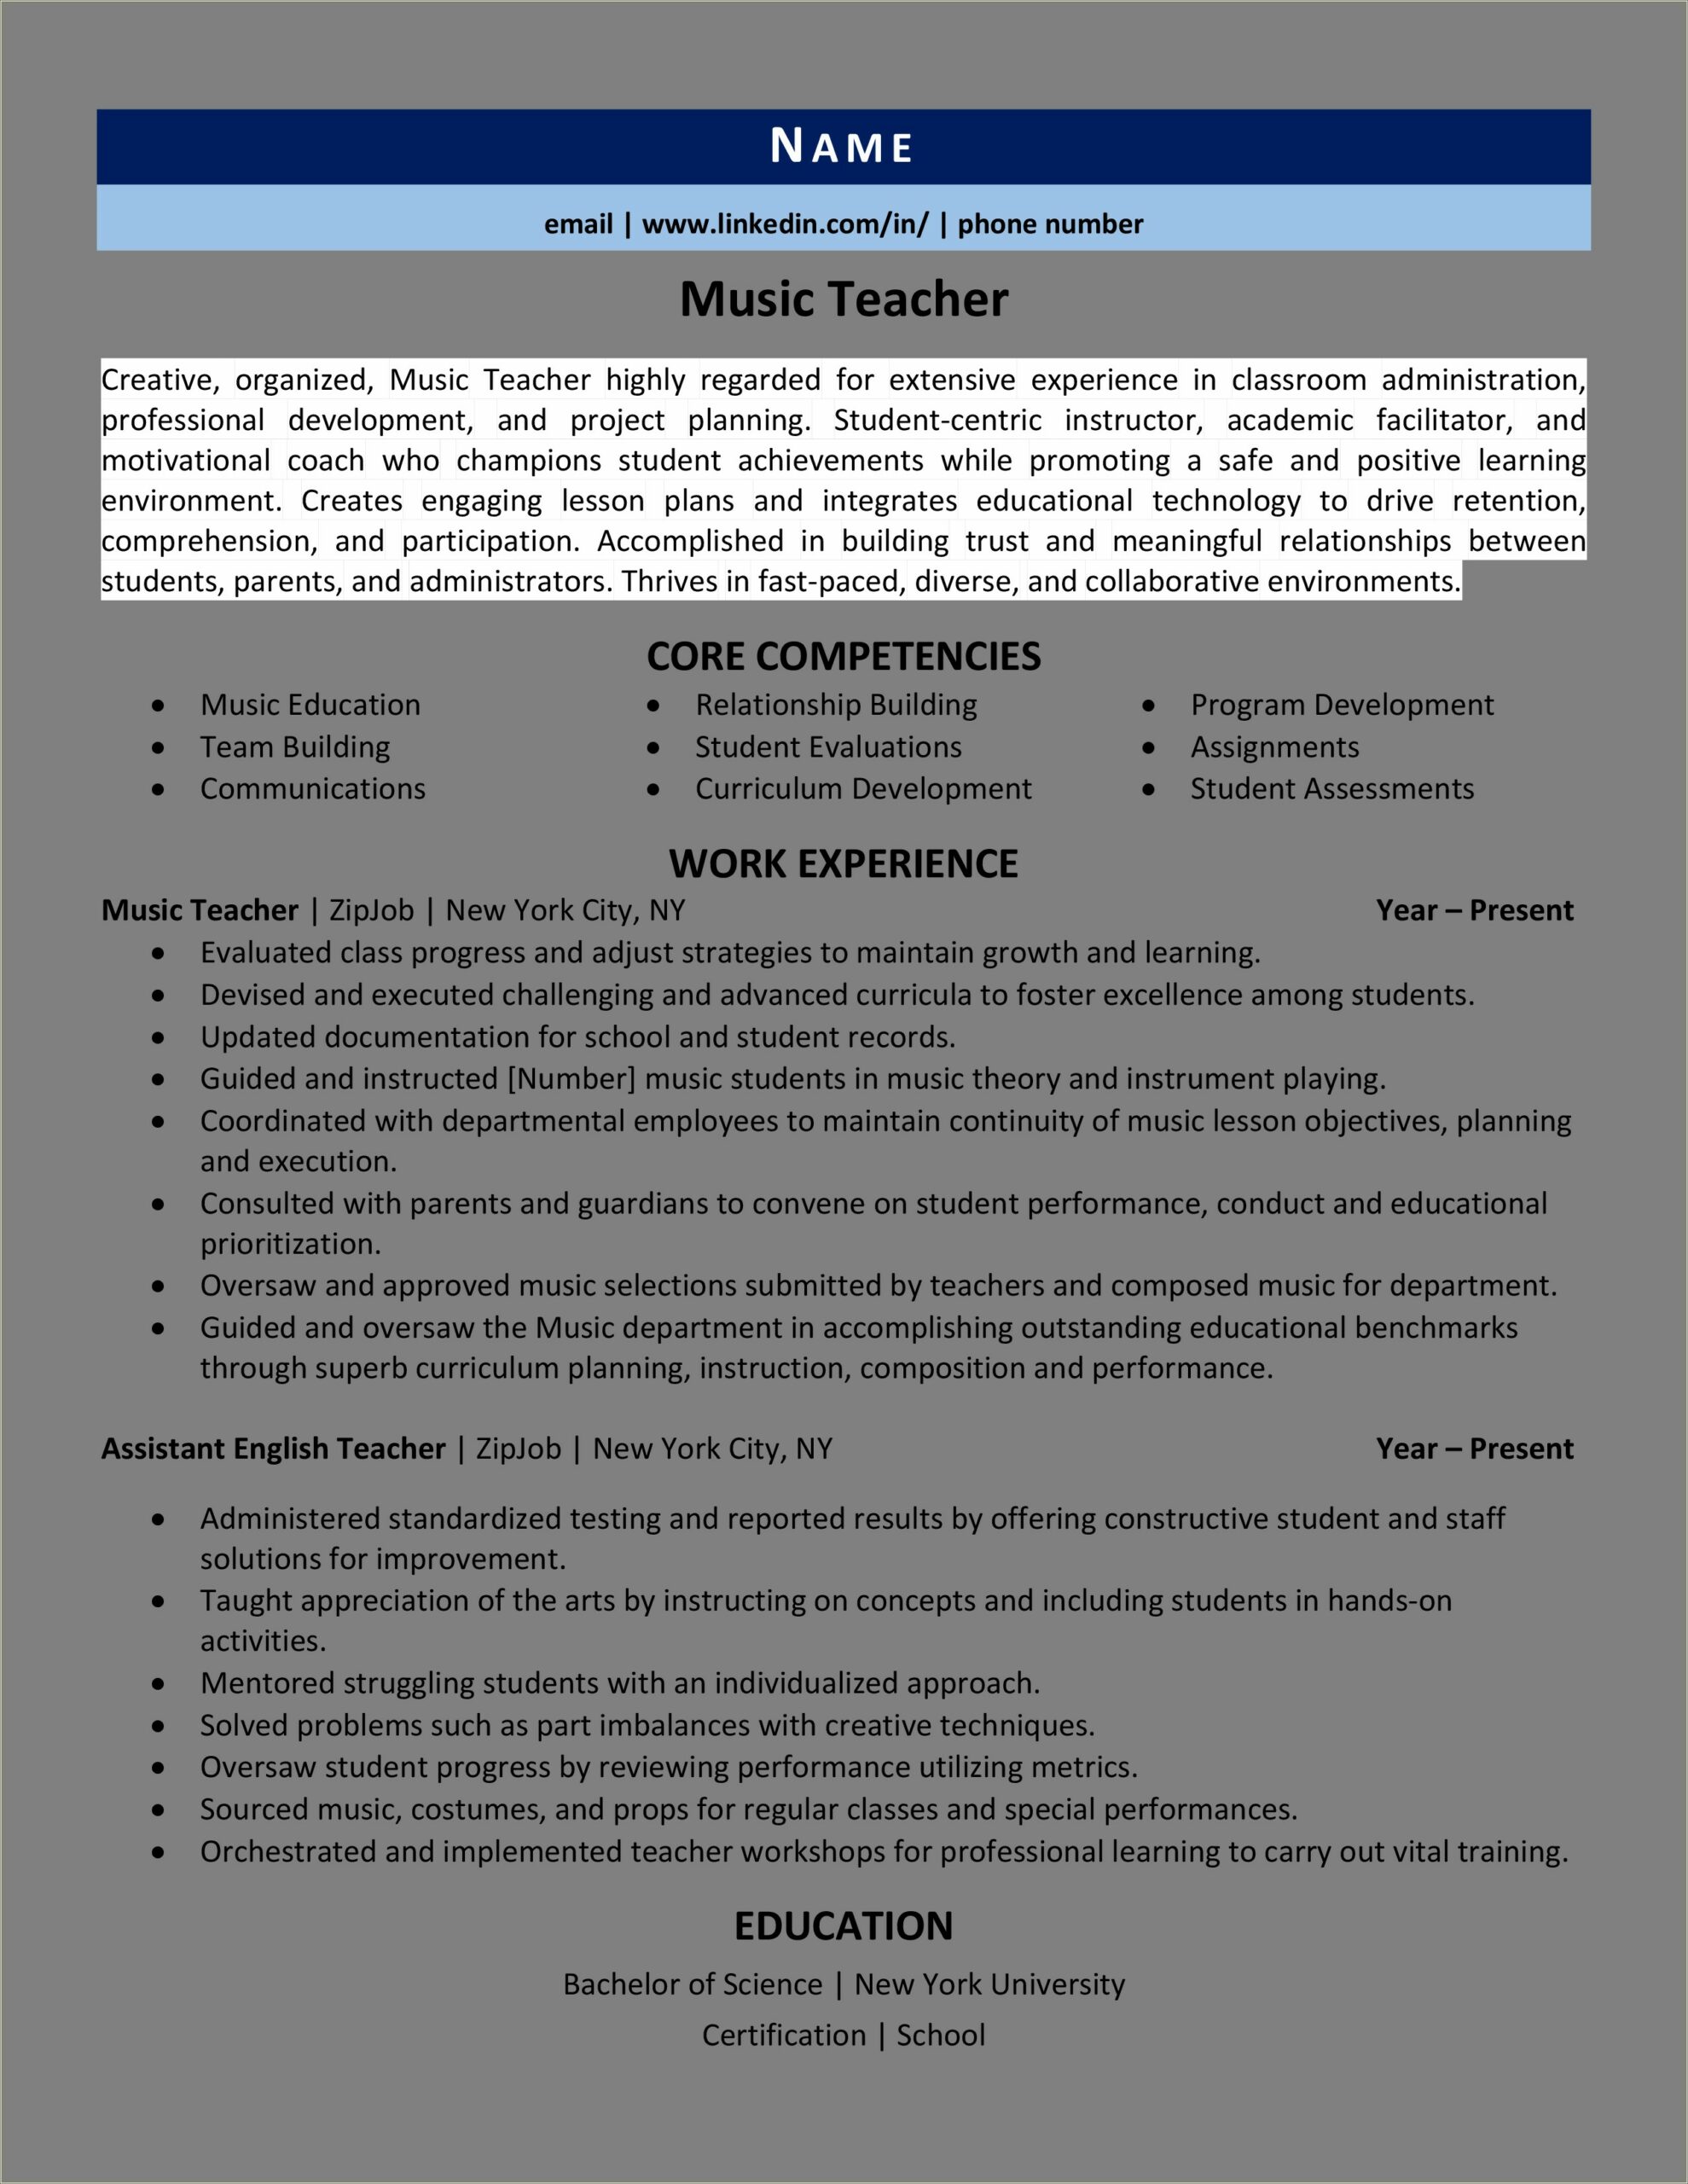 Sample Resume Description Of Adjunct Professor